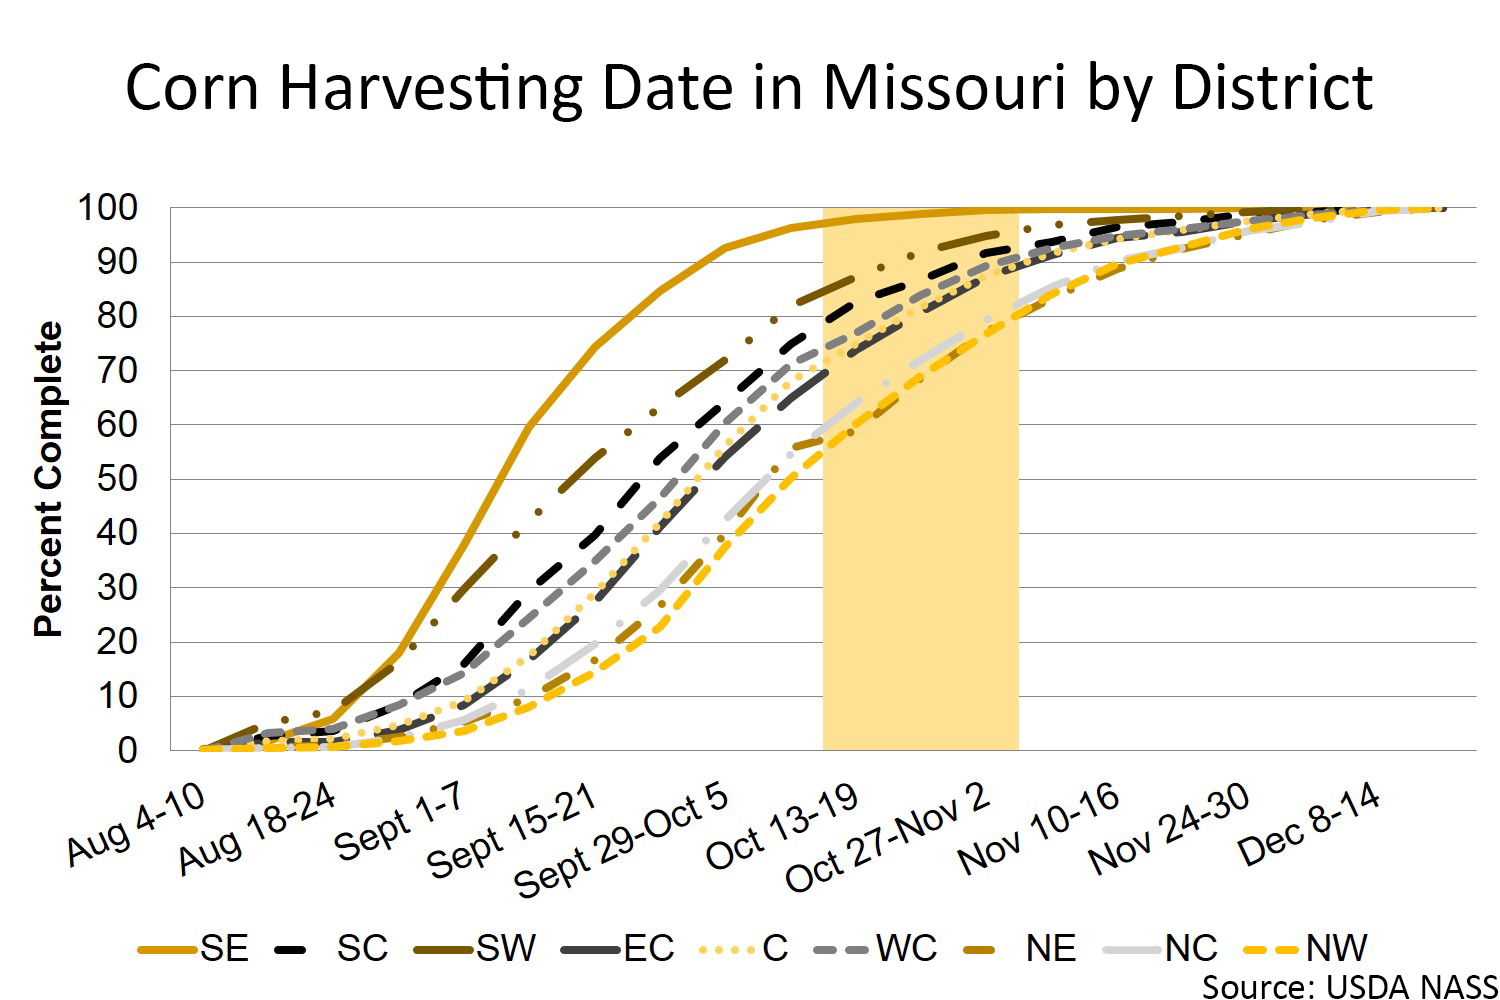 Missouri corn harvesting date by district chart